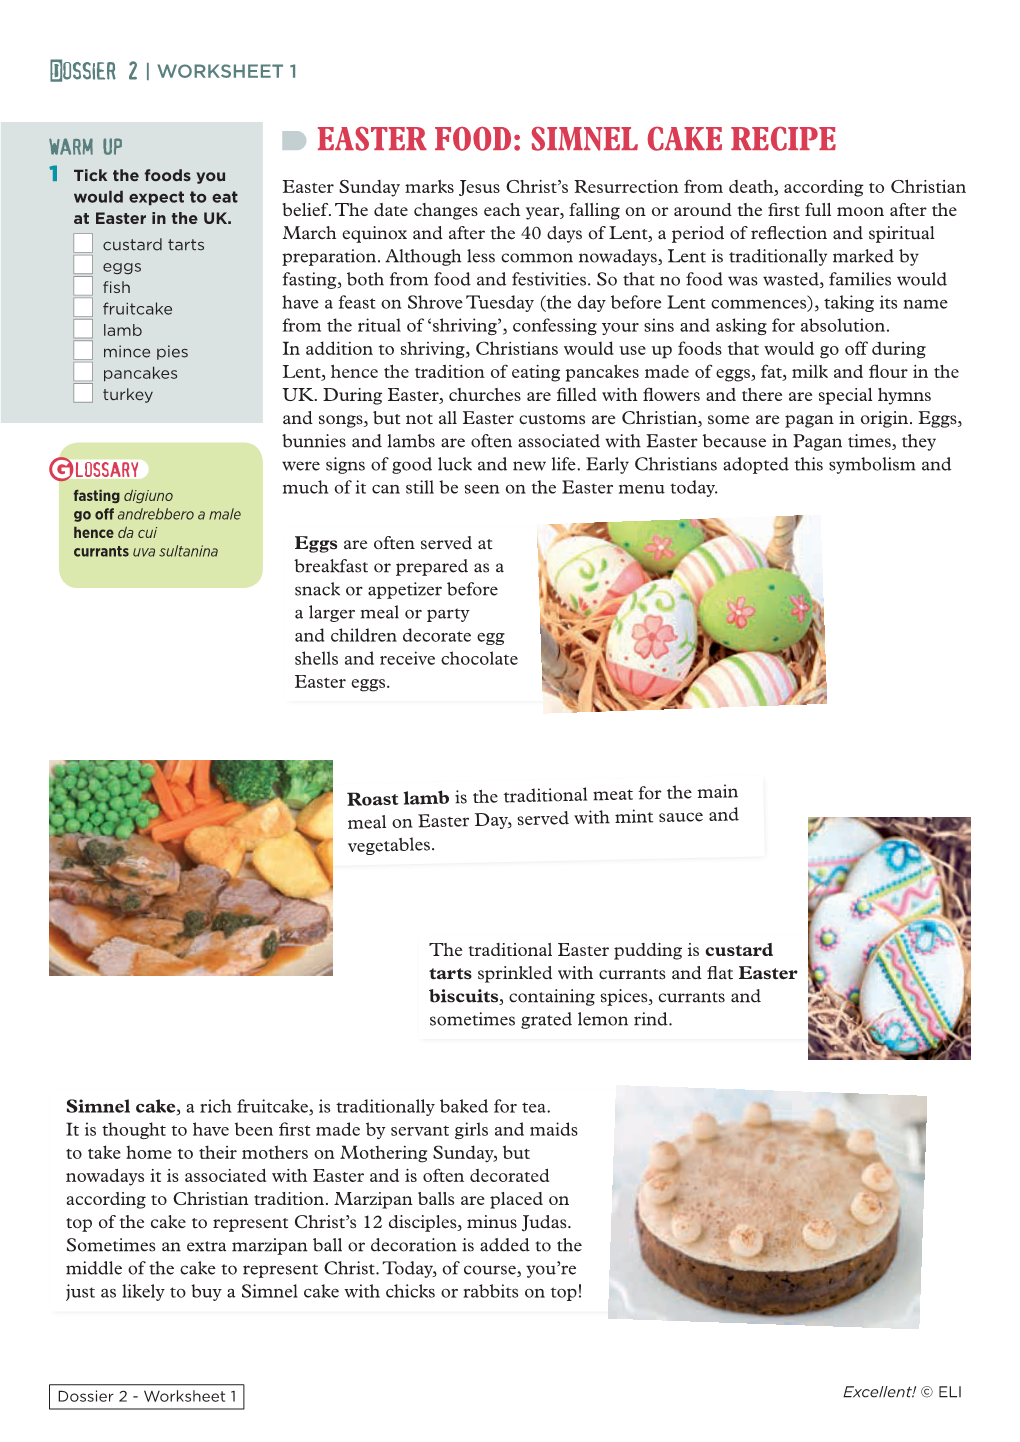 EASTER FOOD: Simnel CAKE RECIPE